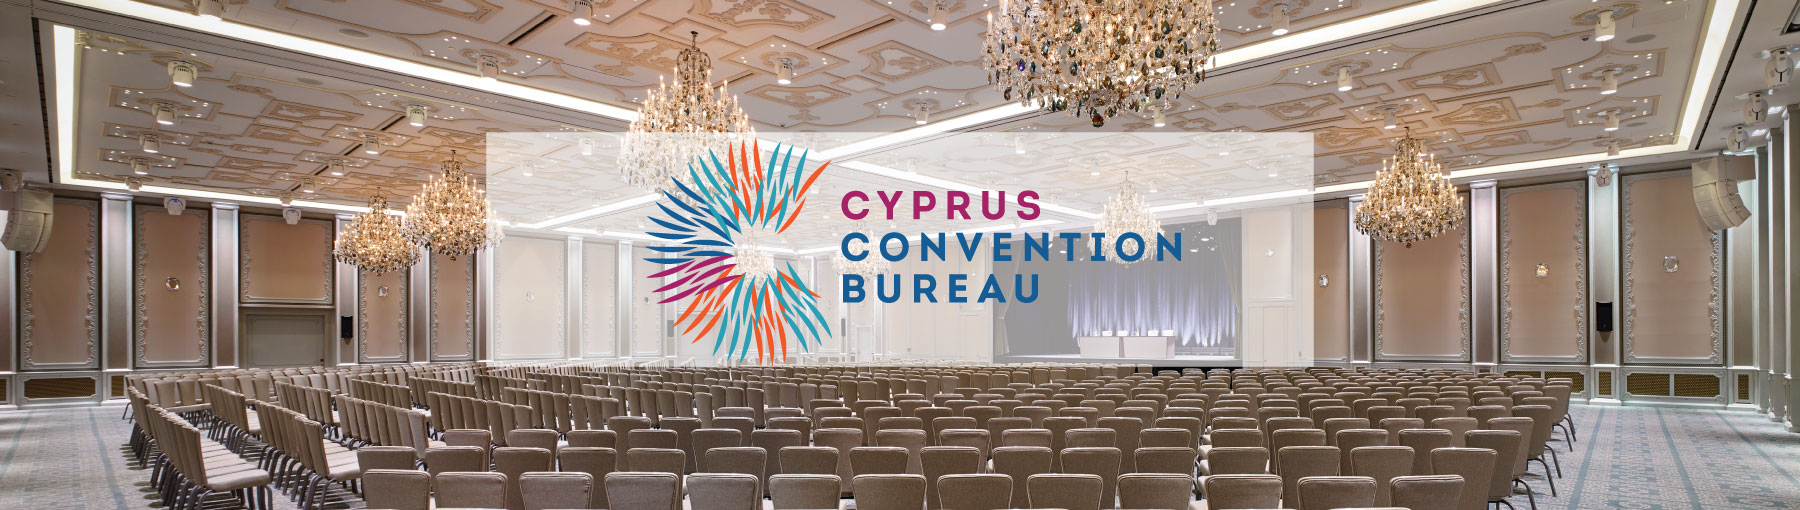 Cyprus Conention Bureau